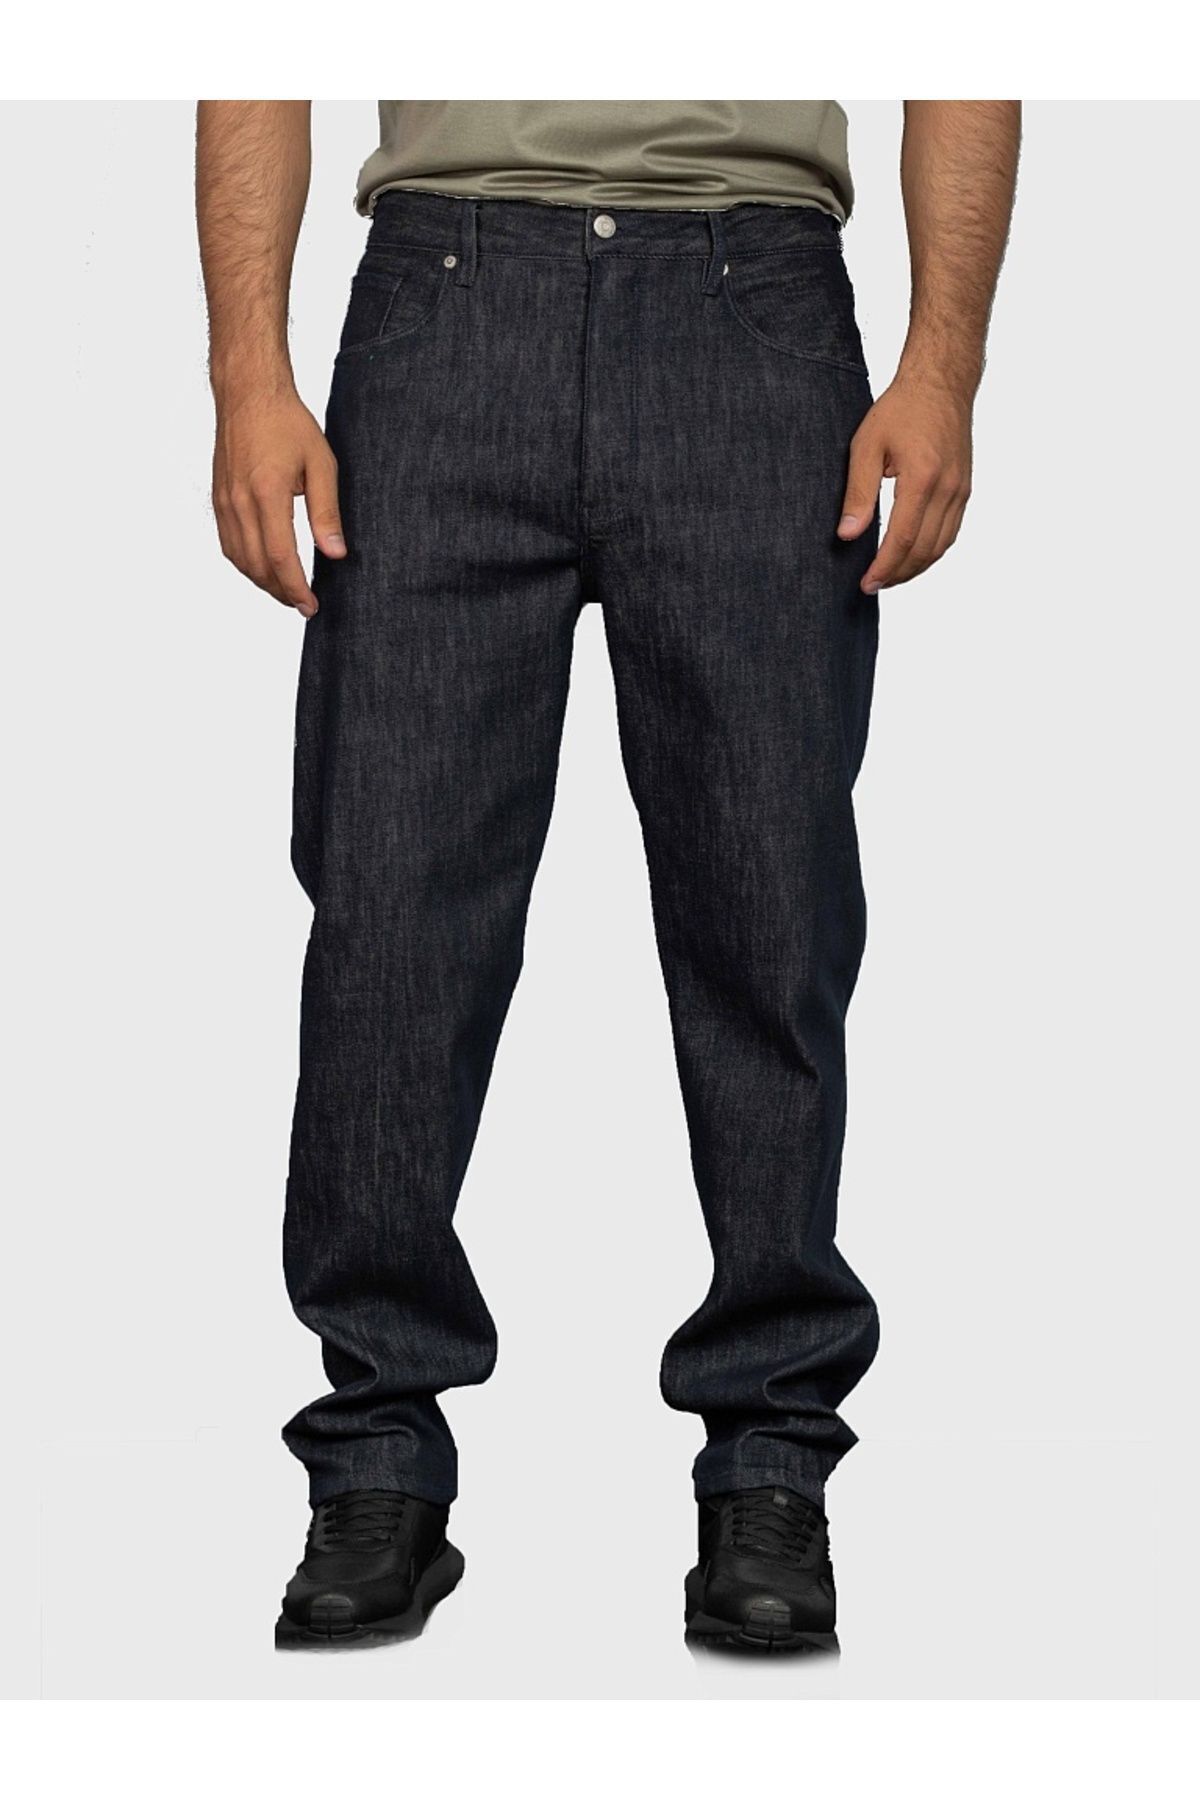 Emporio Armani Erkek Denim Kumaş Normal Bel Düz Model Antrasit Jeans 6R1J72 1DQWZ-0941